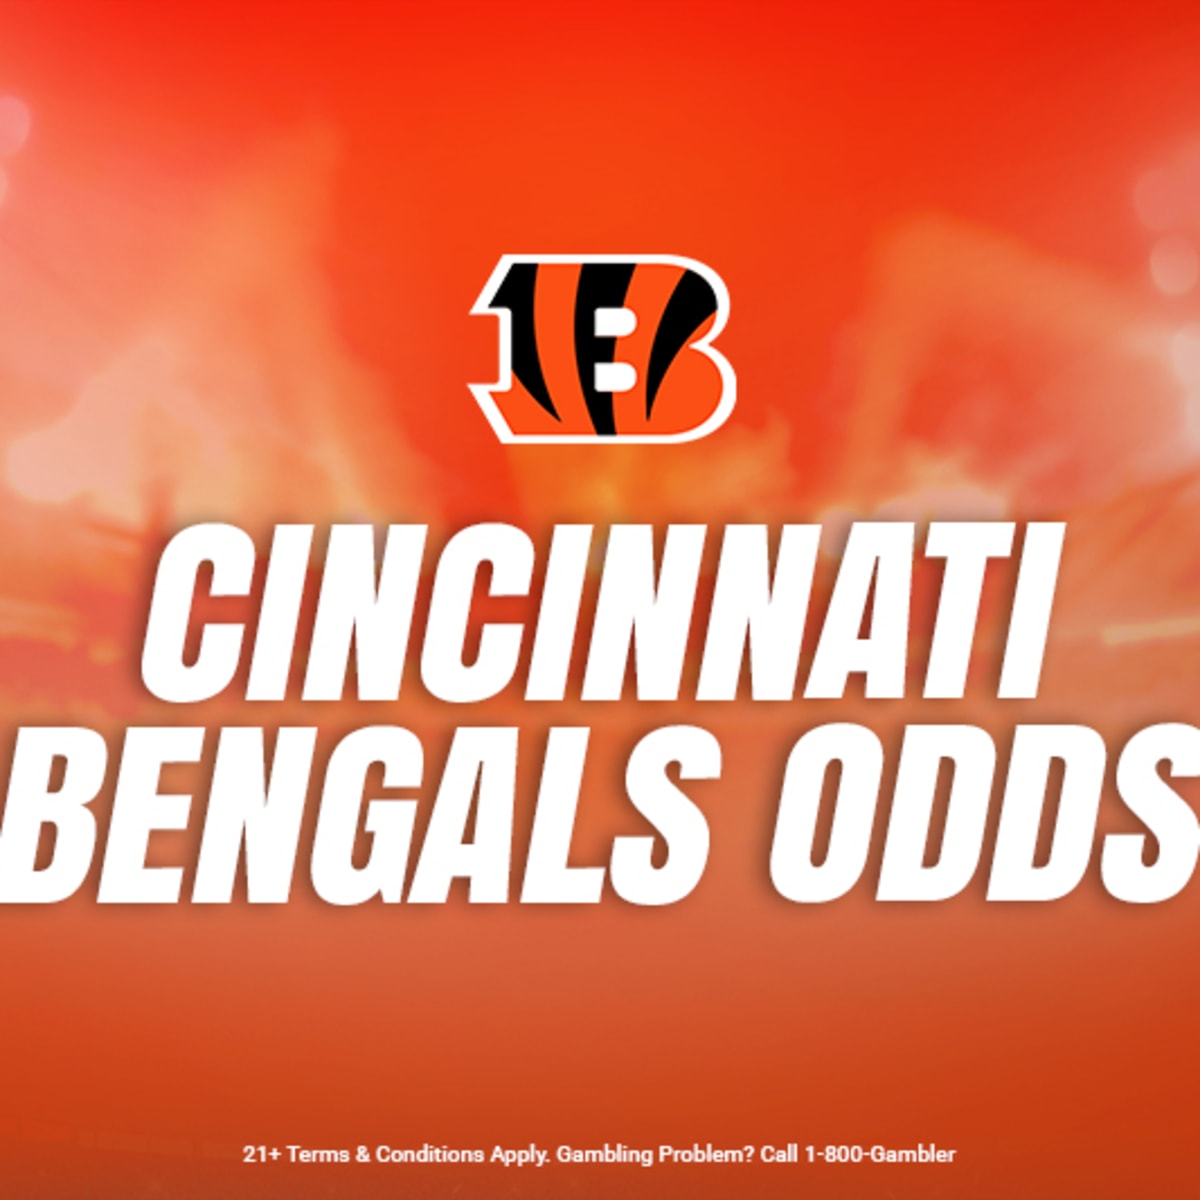 Bengals NFL Betting Odds  Super Bowl, Playoffs & More - Sports